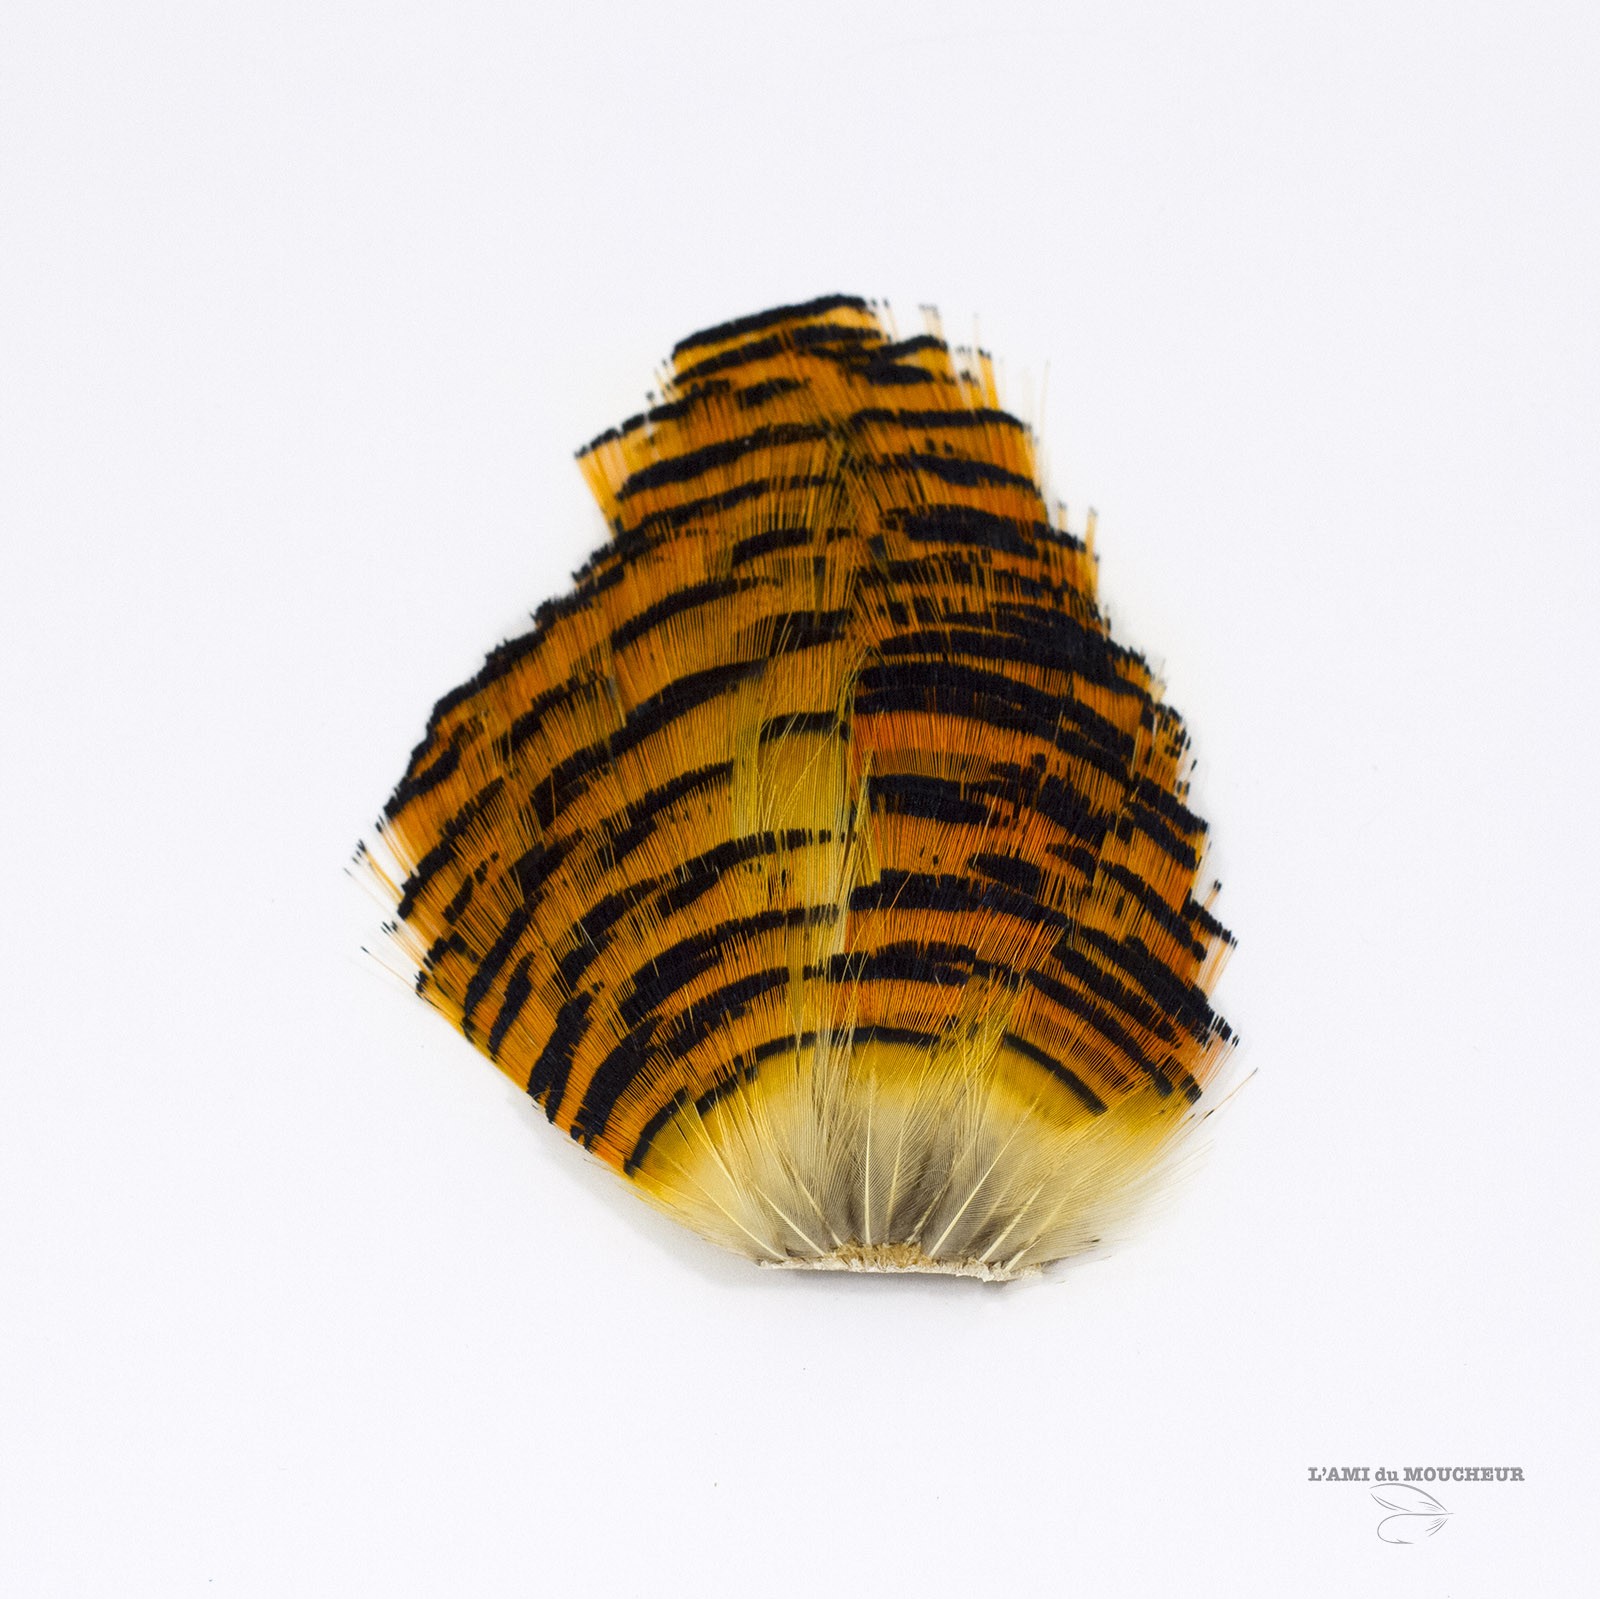 Golden Pheasant Veniard Tippet Feathers